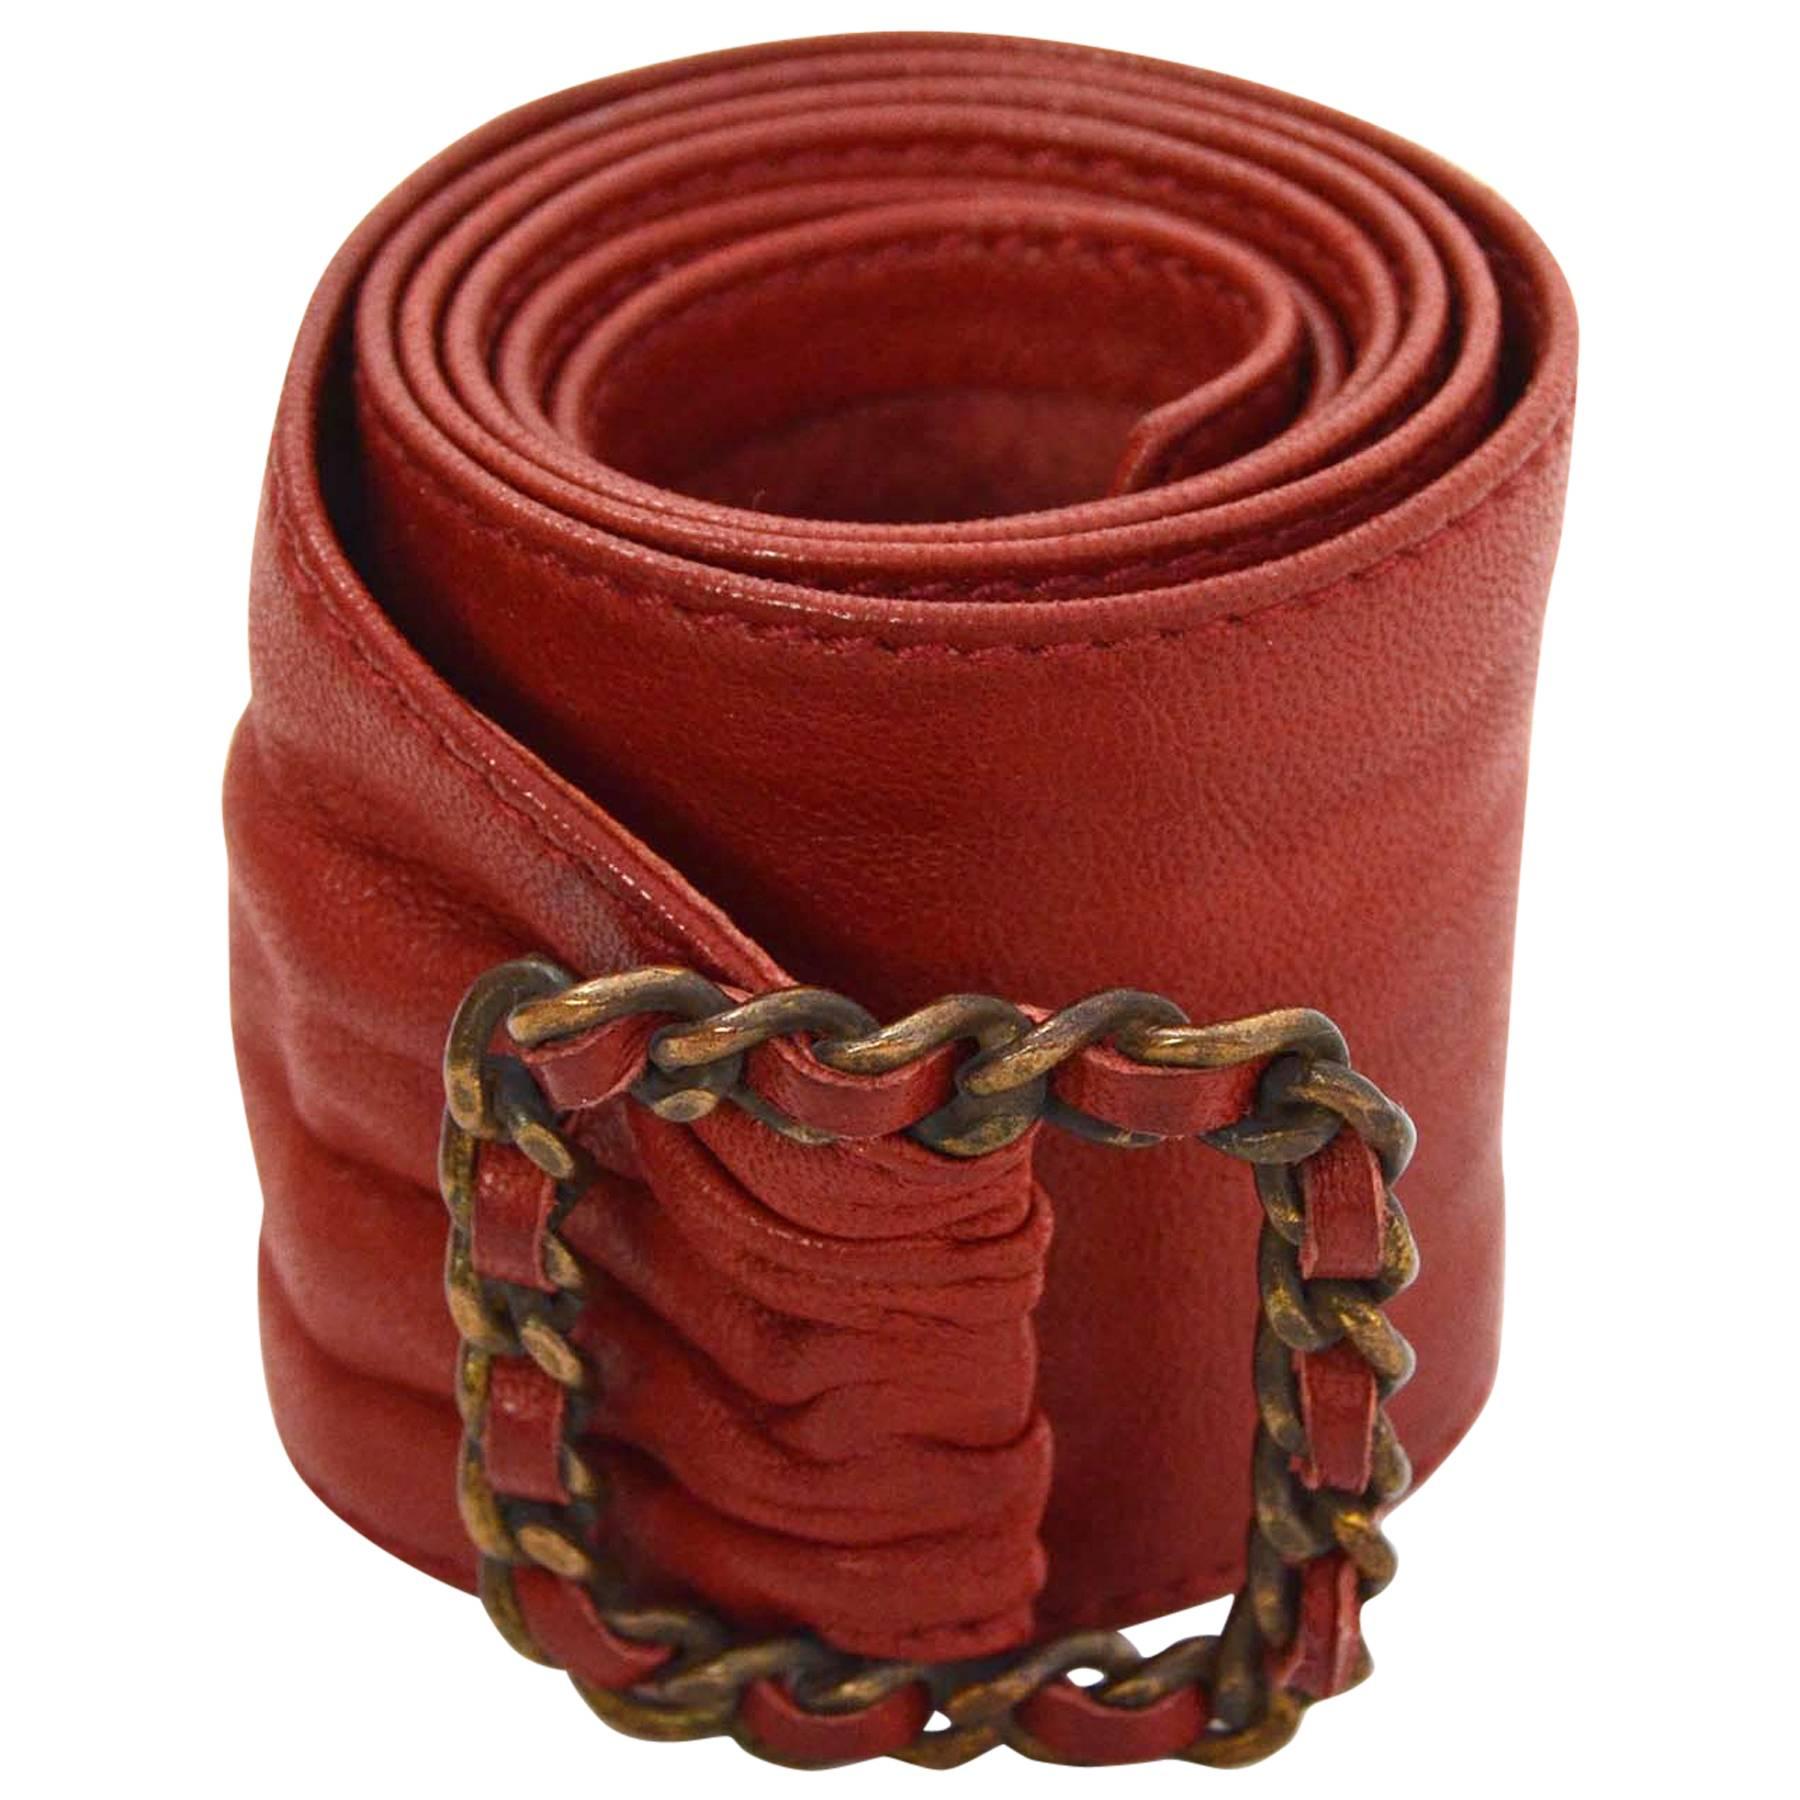 Chanel Red Leather Sash Belt BHW